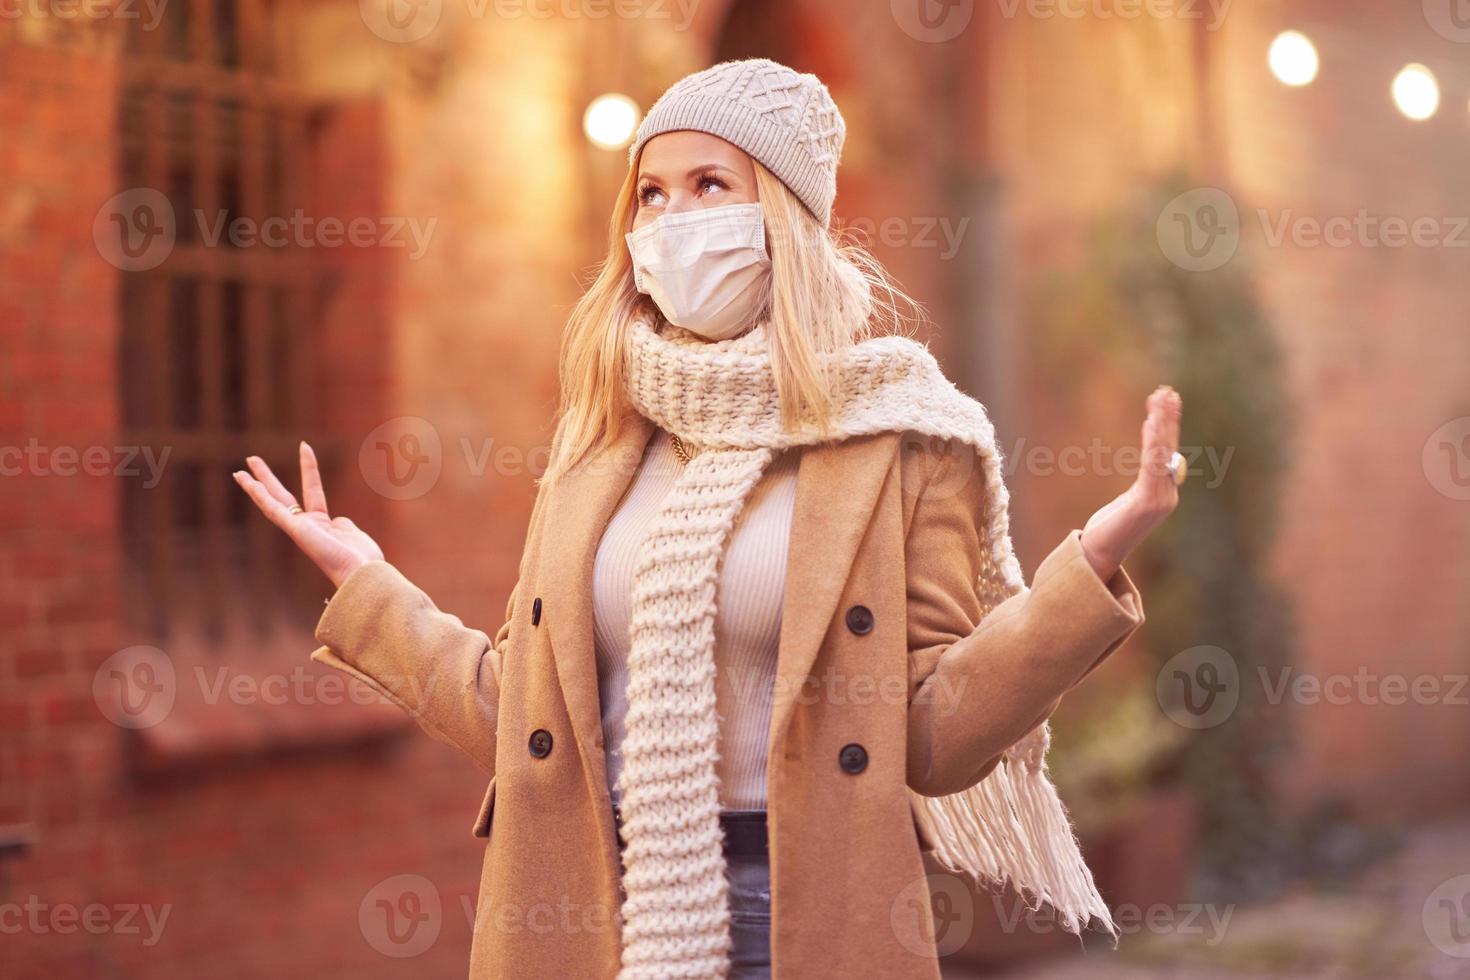 vrouw vervelend gezicht masker omdat van lucht verontreiniging of virus epidemie in de stad foto